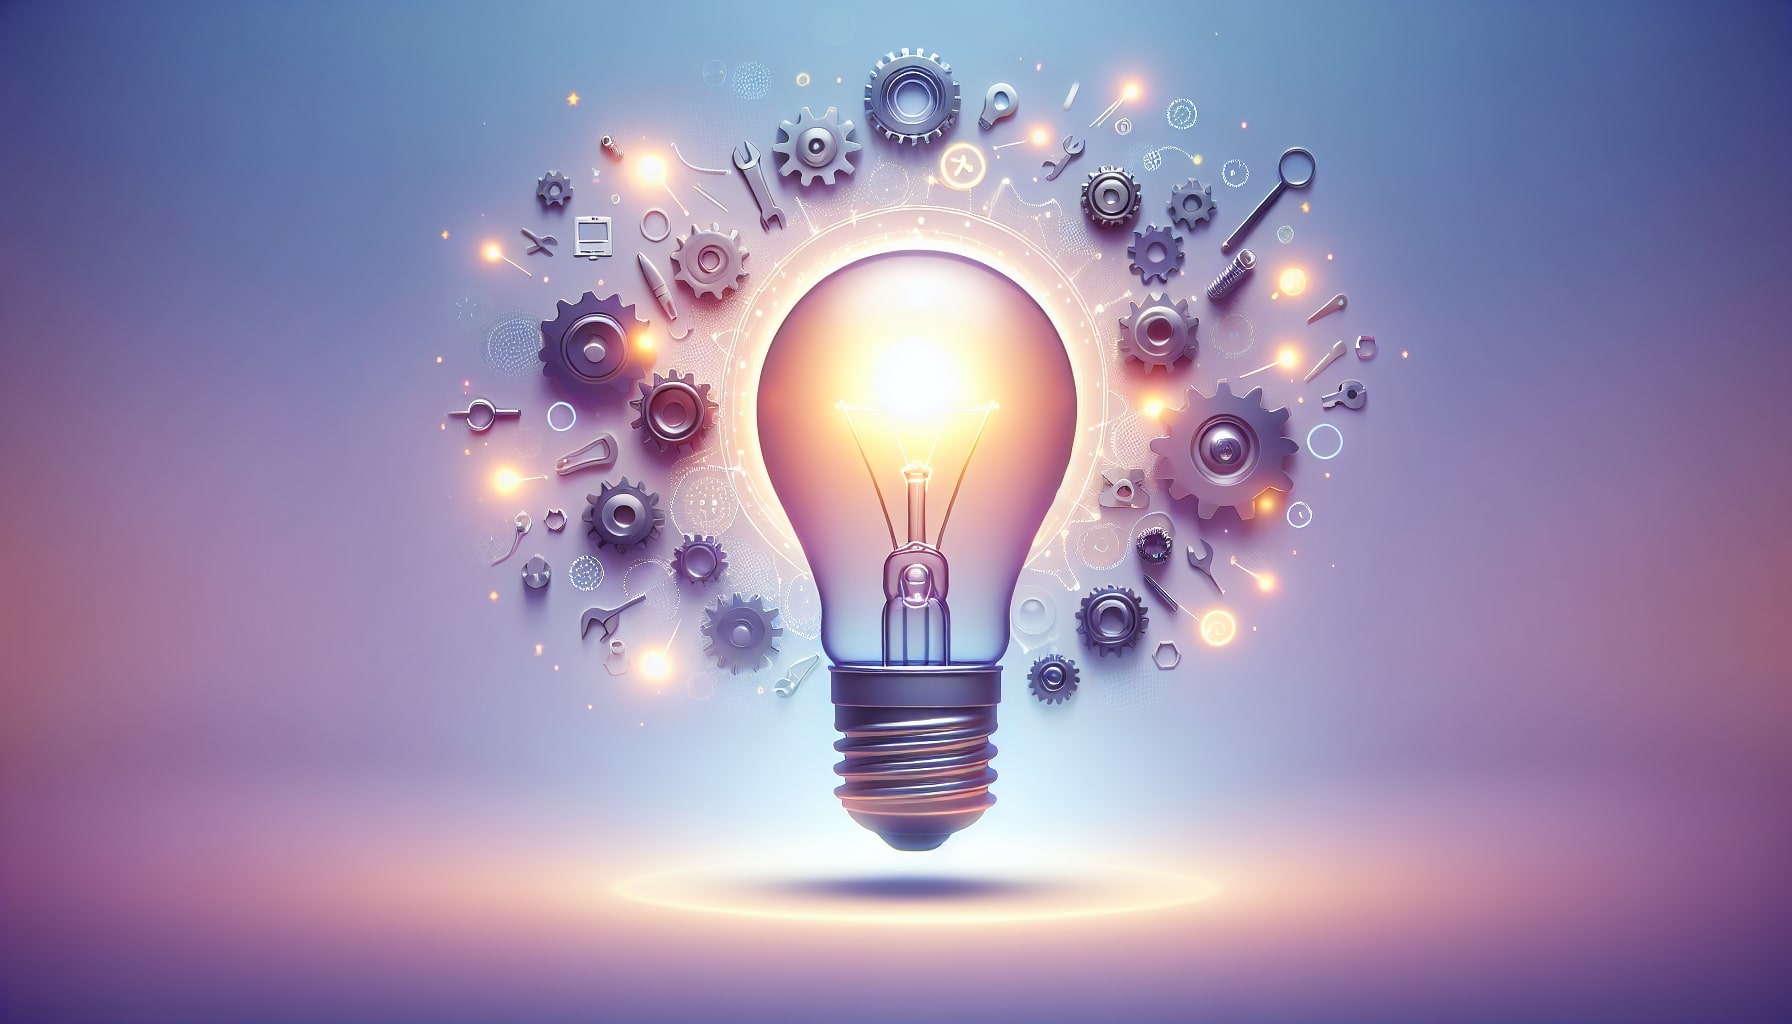 Illustration of light bulb representing creativity and innovation